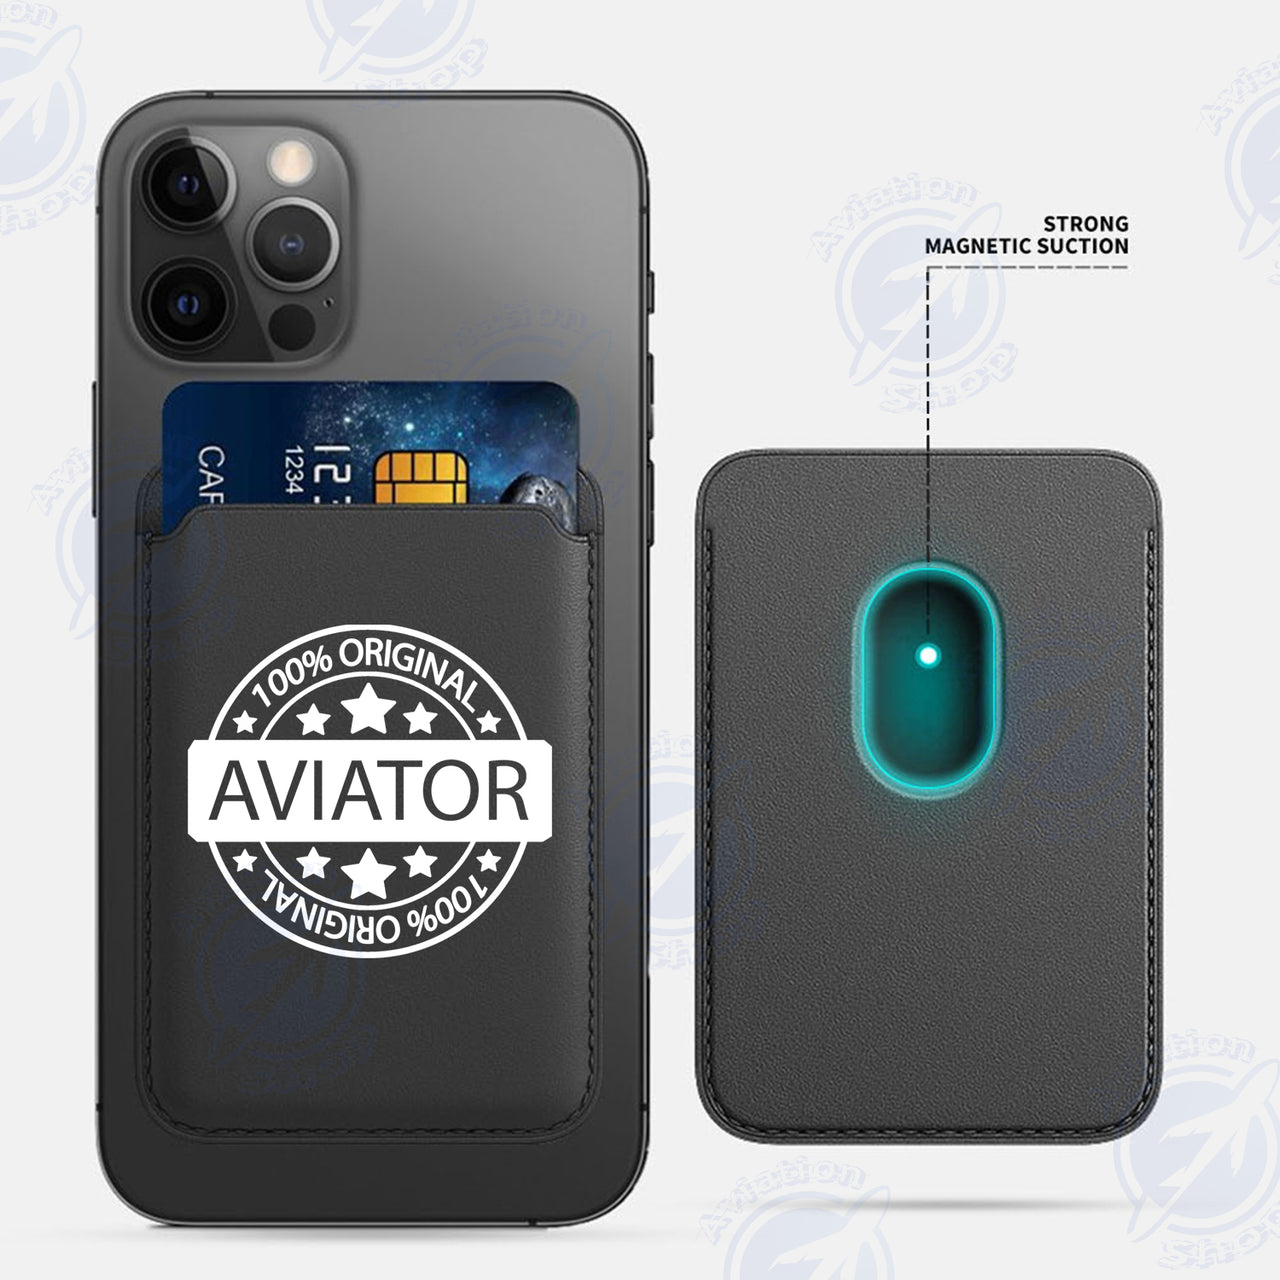 %100 Original Aviator iPhone Cases Magnetic Card Wallet